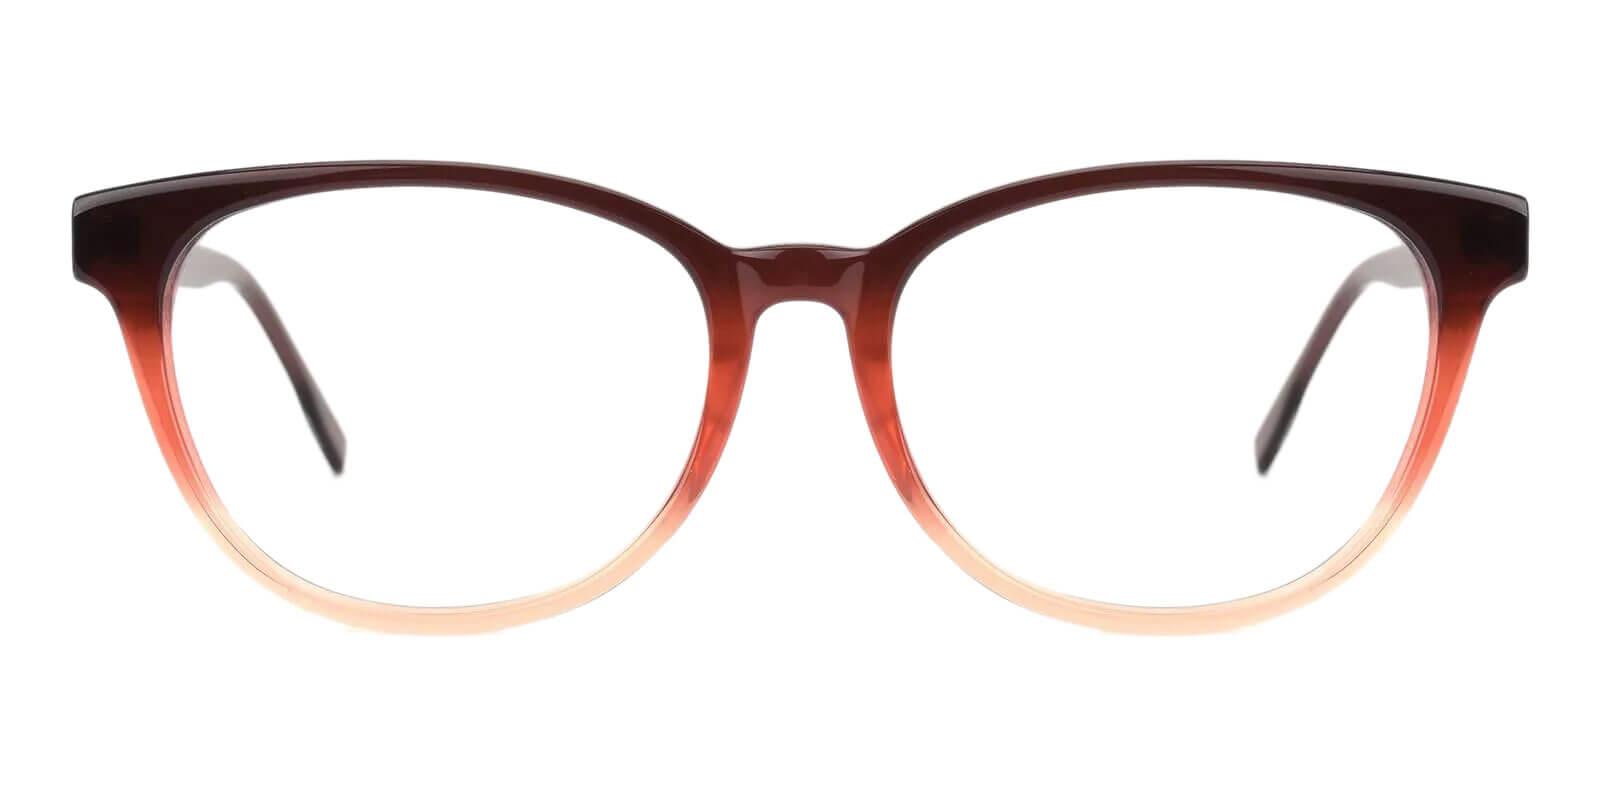 Bouquet Brown Acetate Eyeglasses , SpringHinges , UniversalBridgeFit Frames from ABBE Glasses